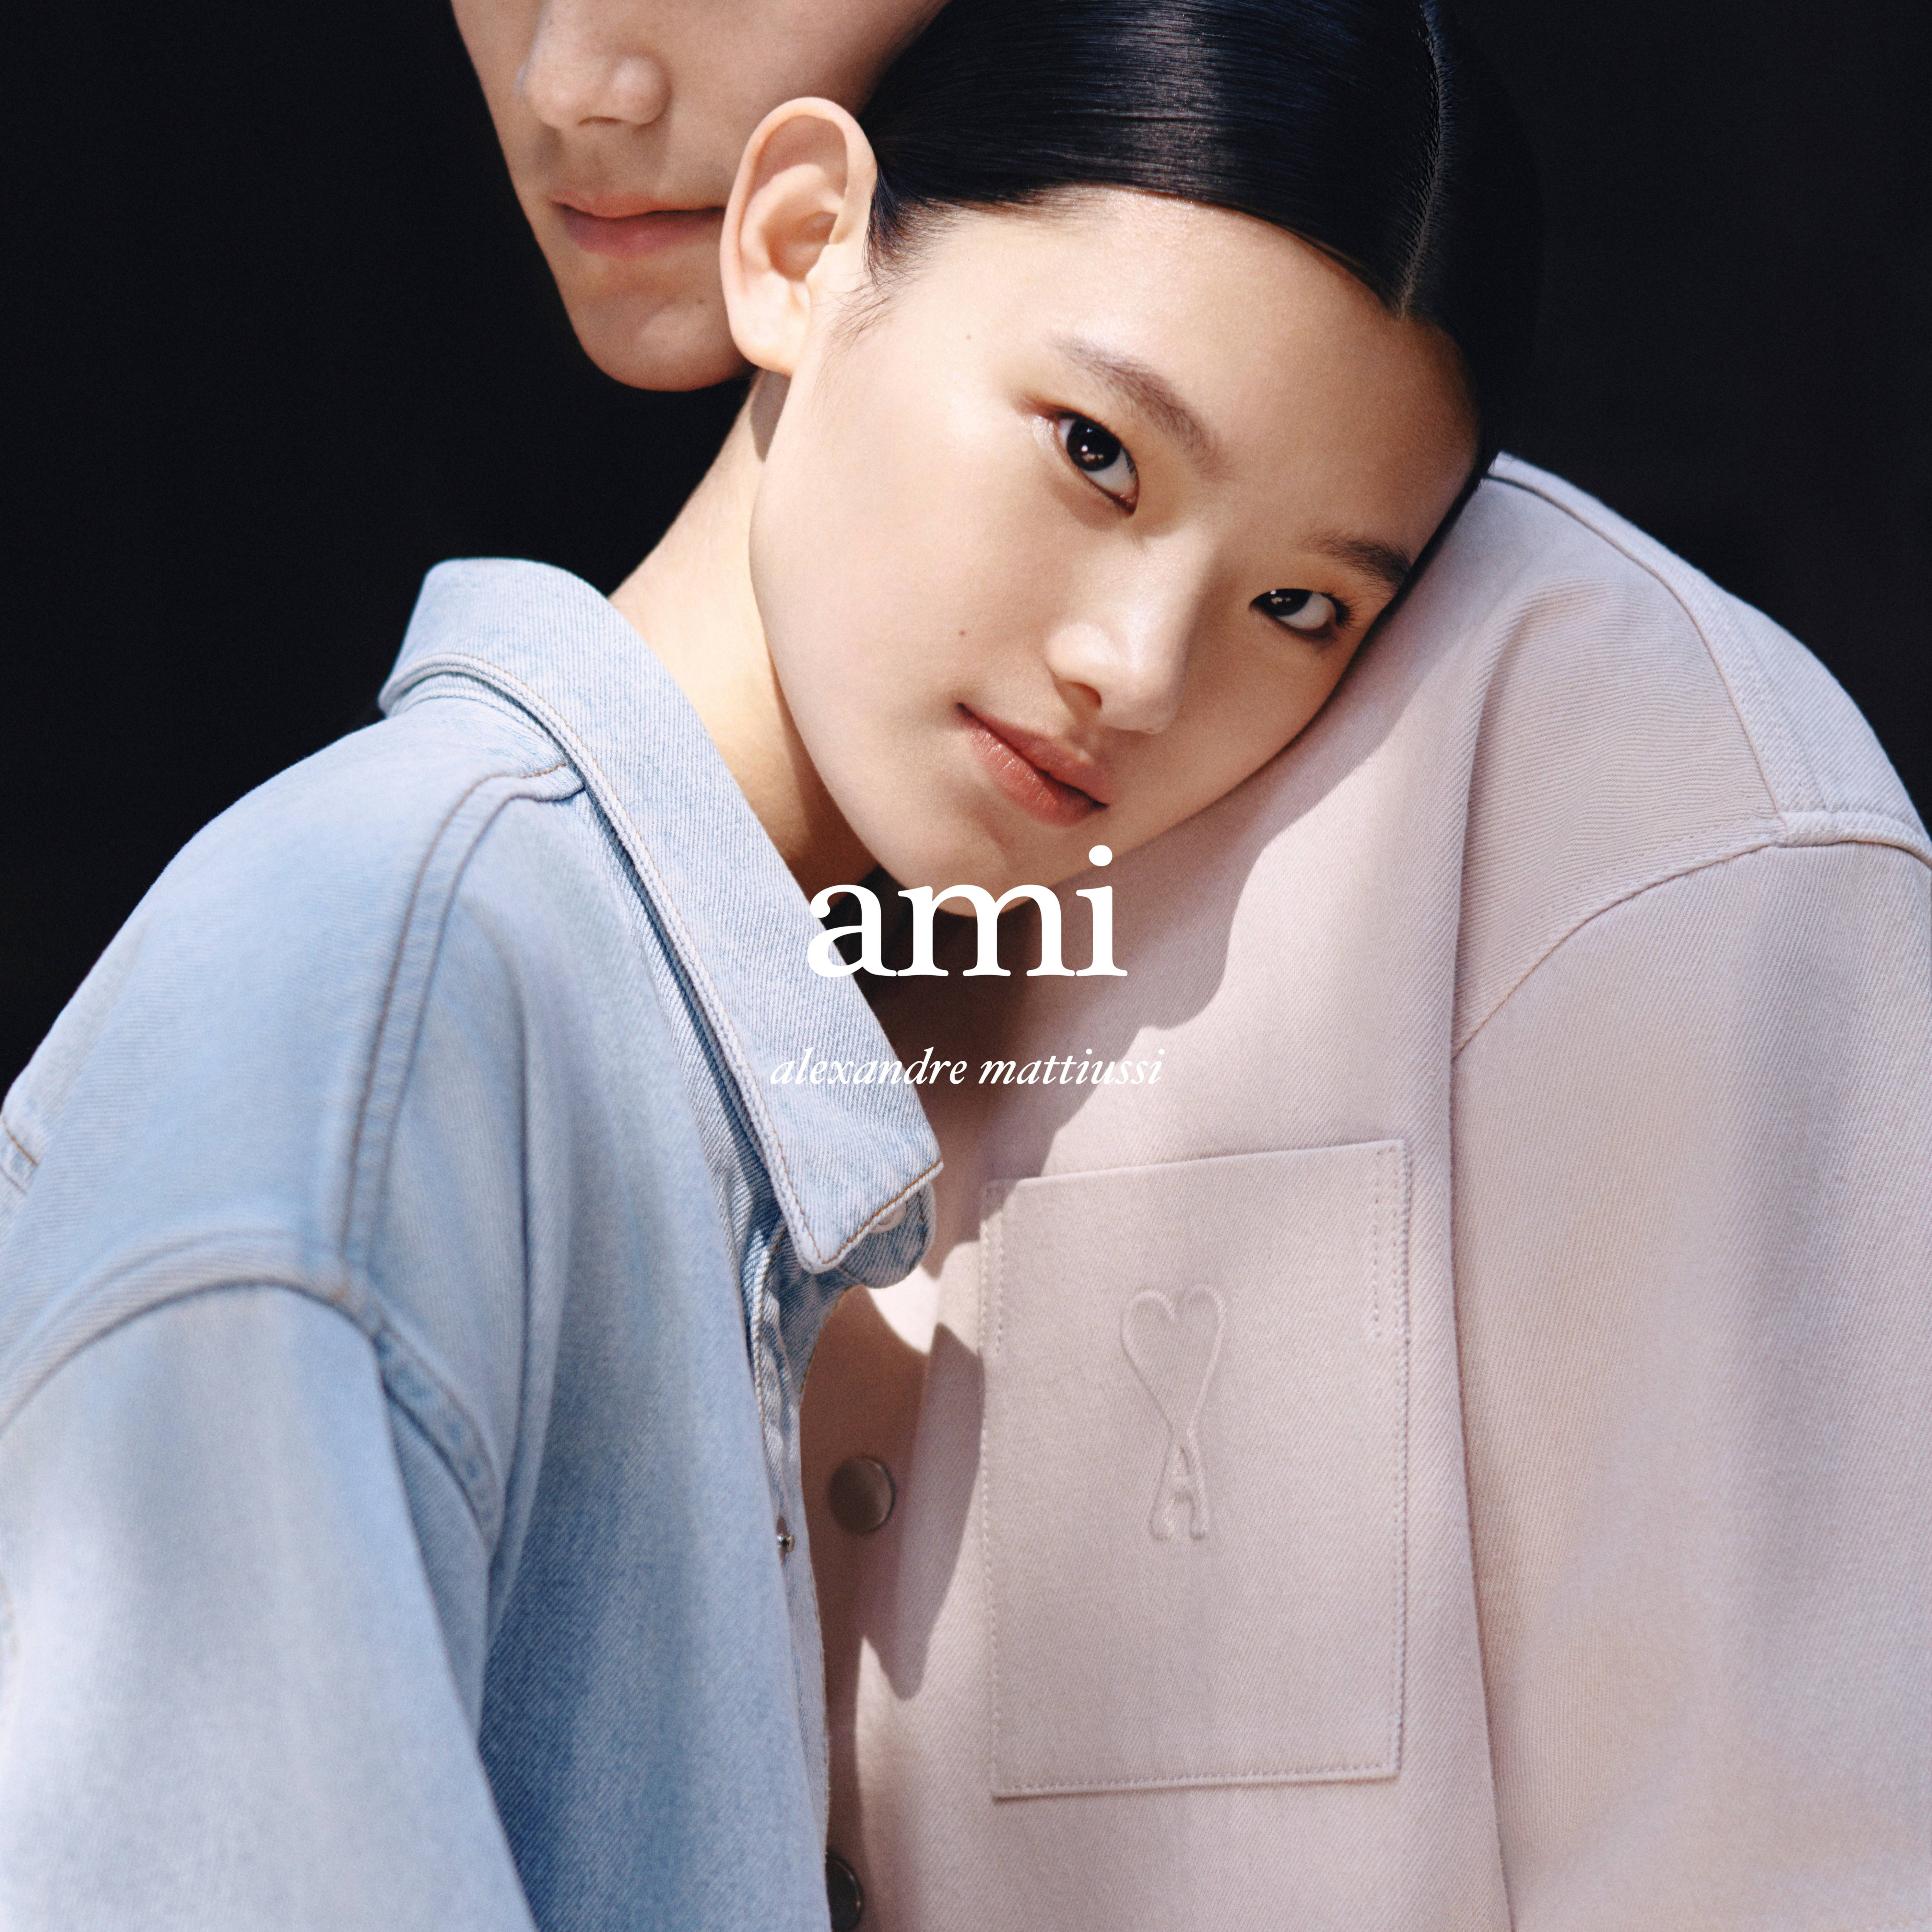 AMI推出全新七夕限定系列新品发布